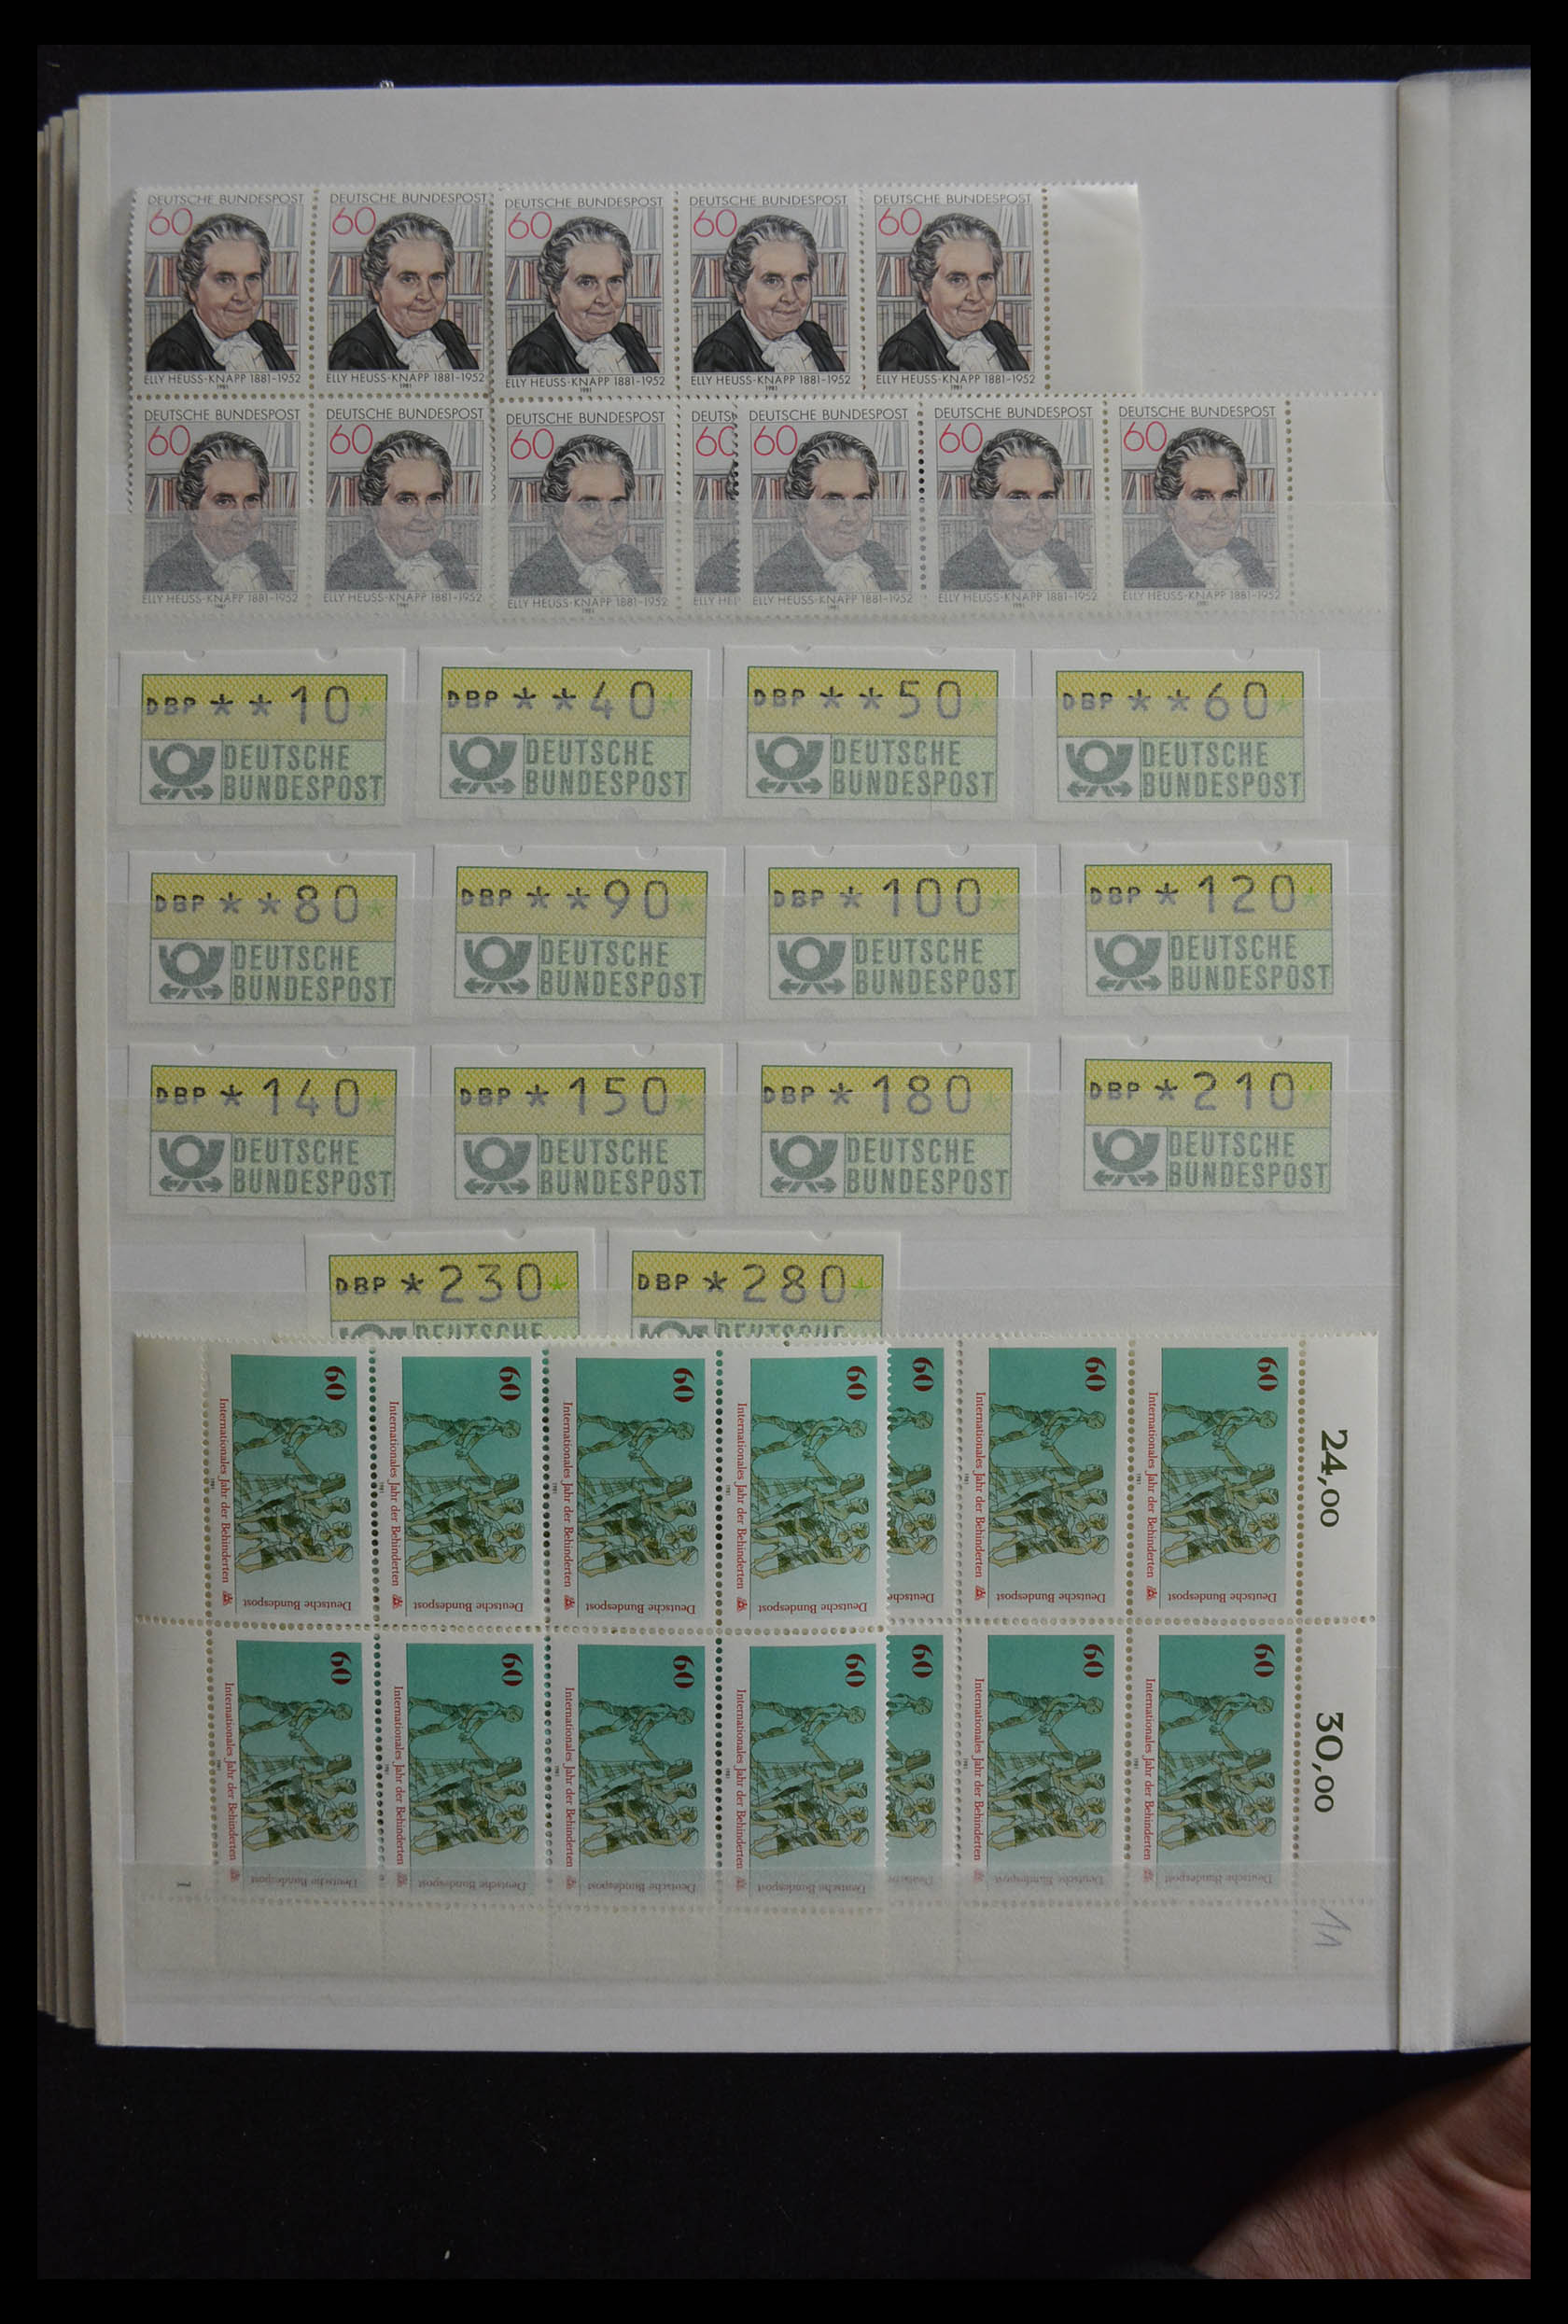 28379 094 - 28379 Bundespost 1958-2000 postfrisse stock.